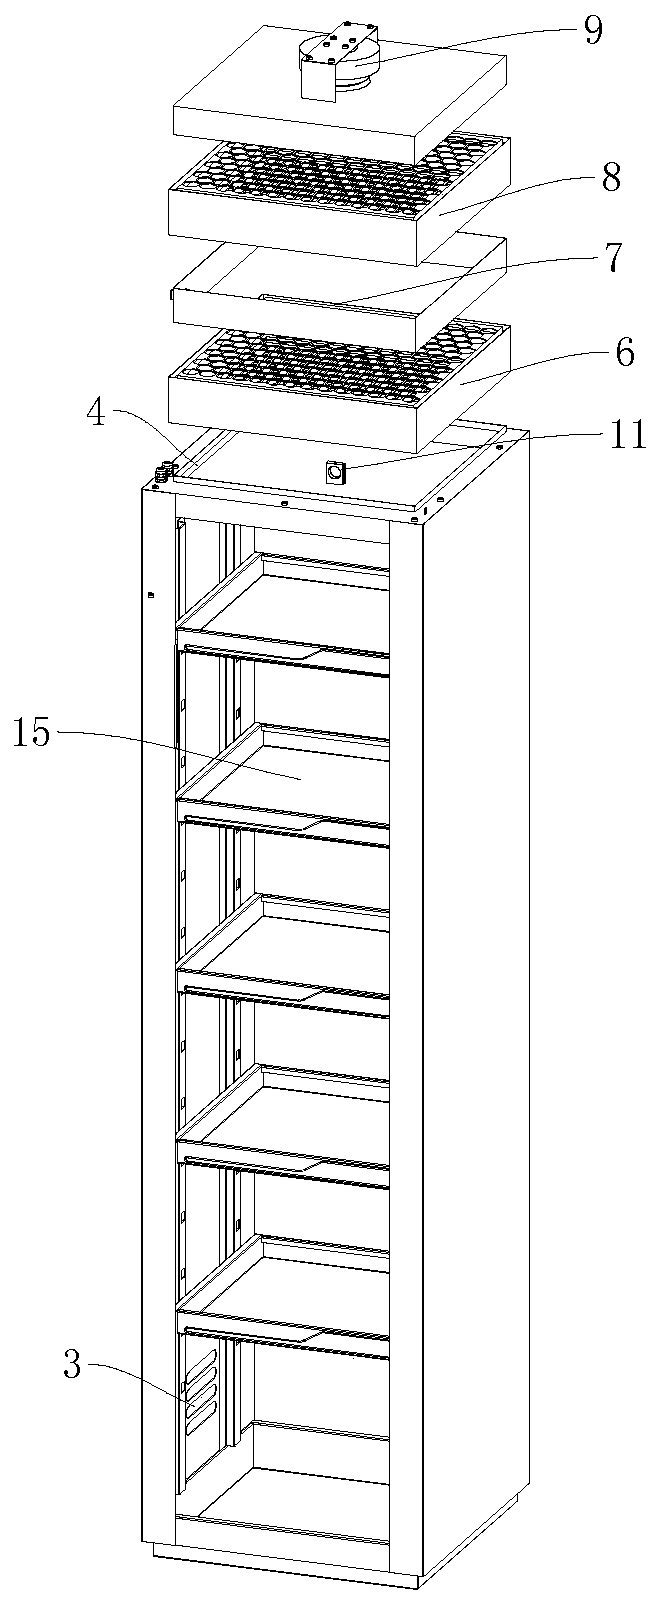 Non-duct self-purification medicine storage cabinet